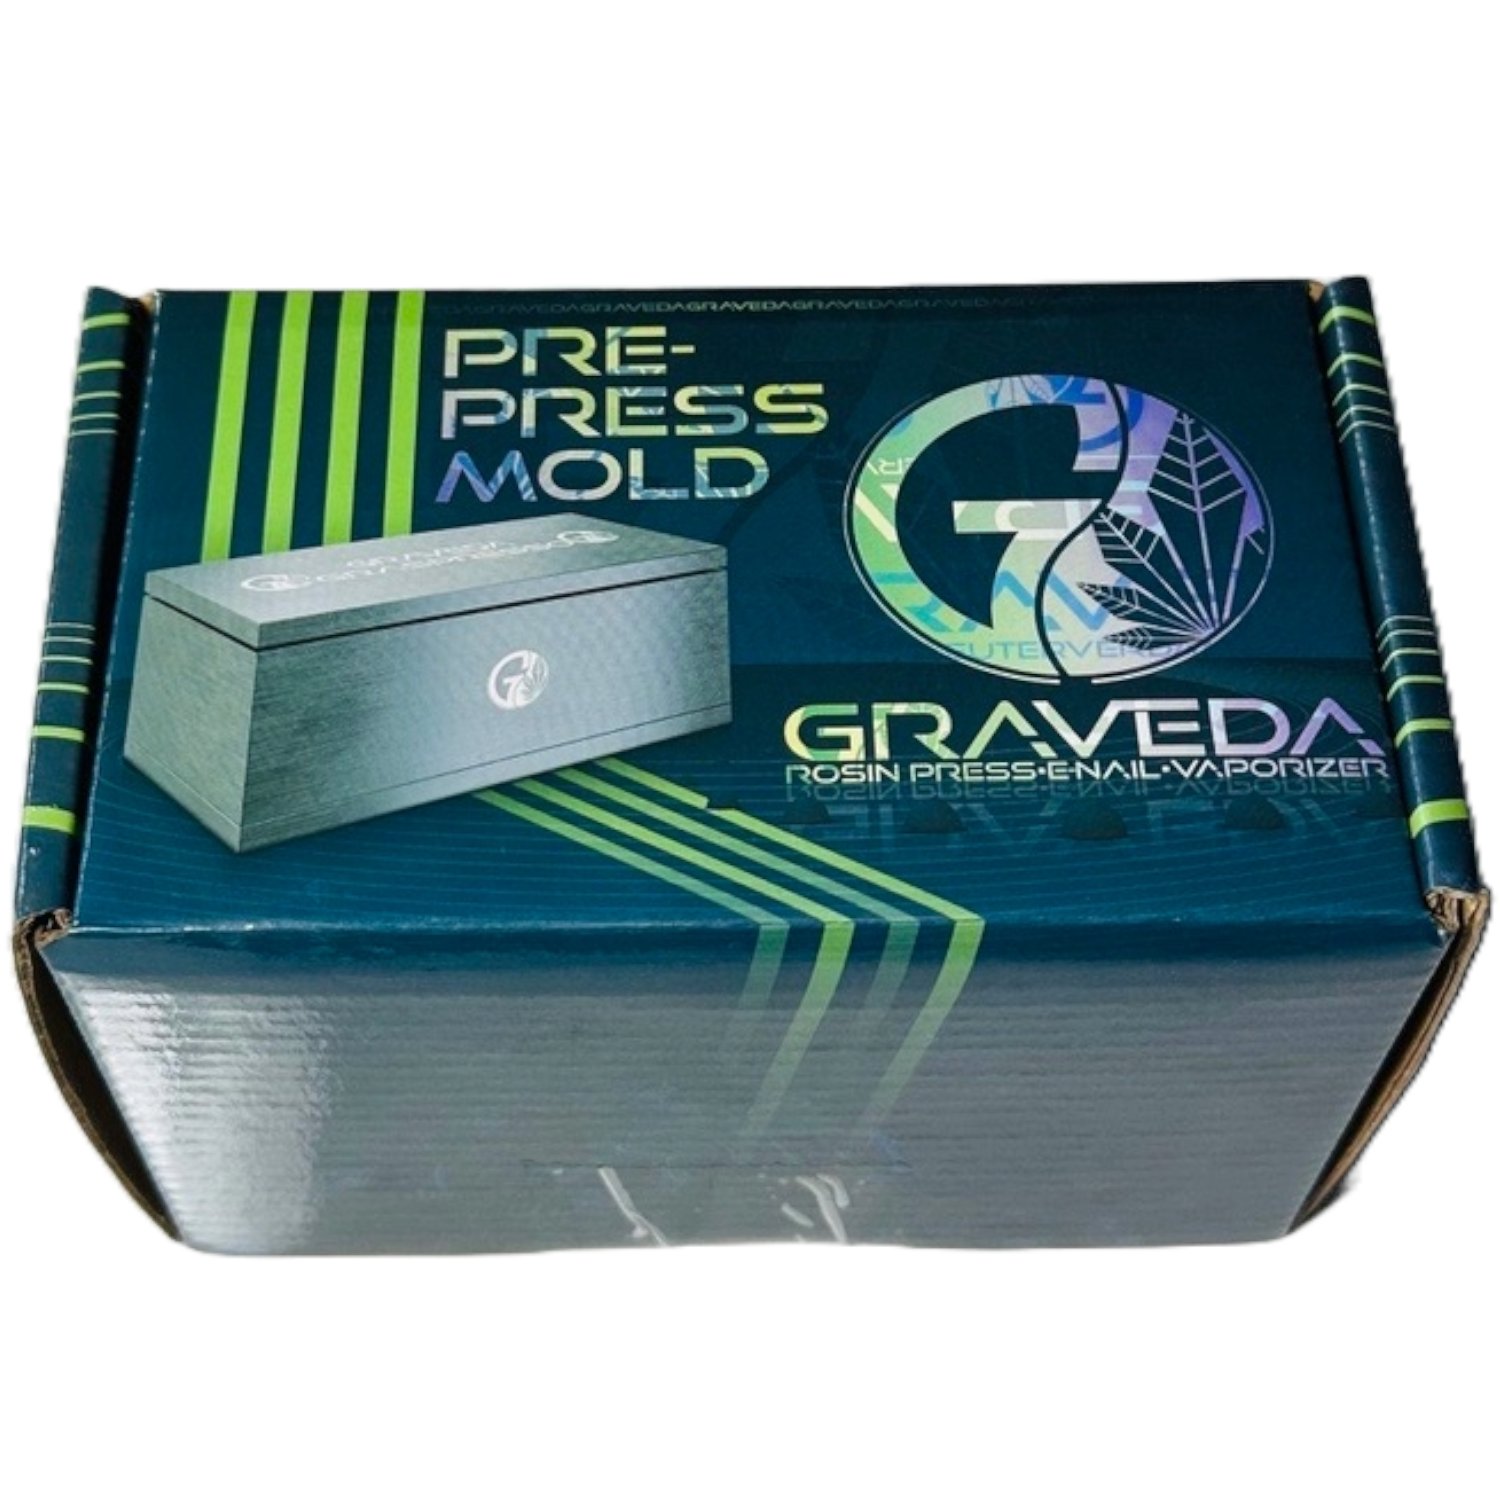 Graveda Pre Press Mold 10 x 5 cm perfekt passend für Graveda Rosin Bag 51x114